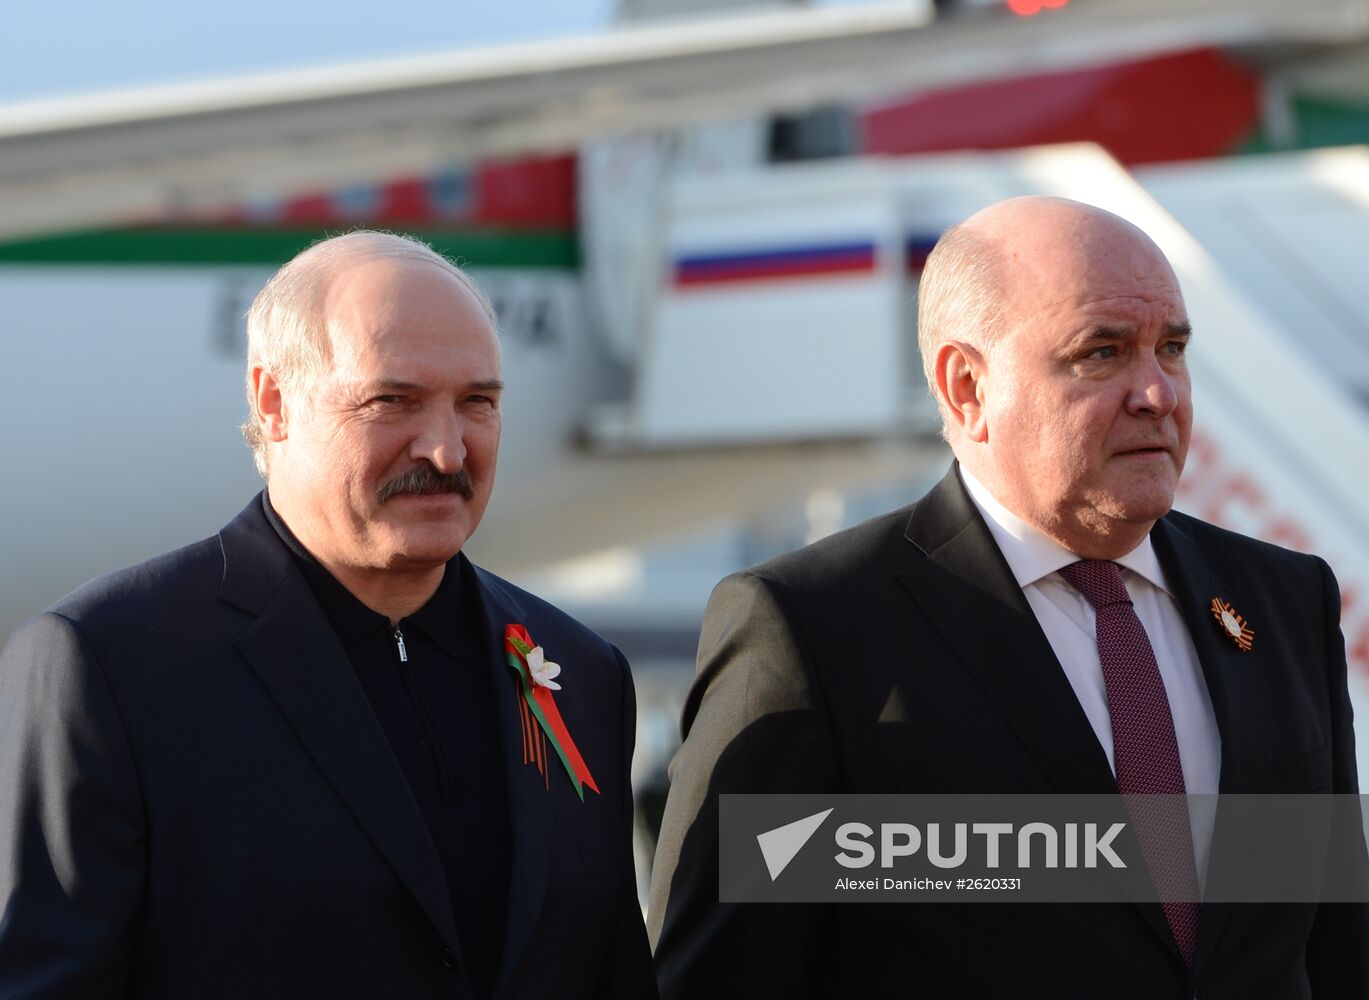 President of Belarus Alexander Lukashenko arrives in Moscow